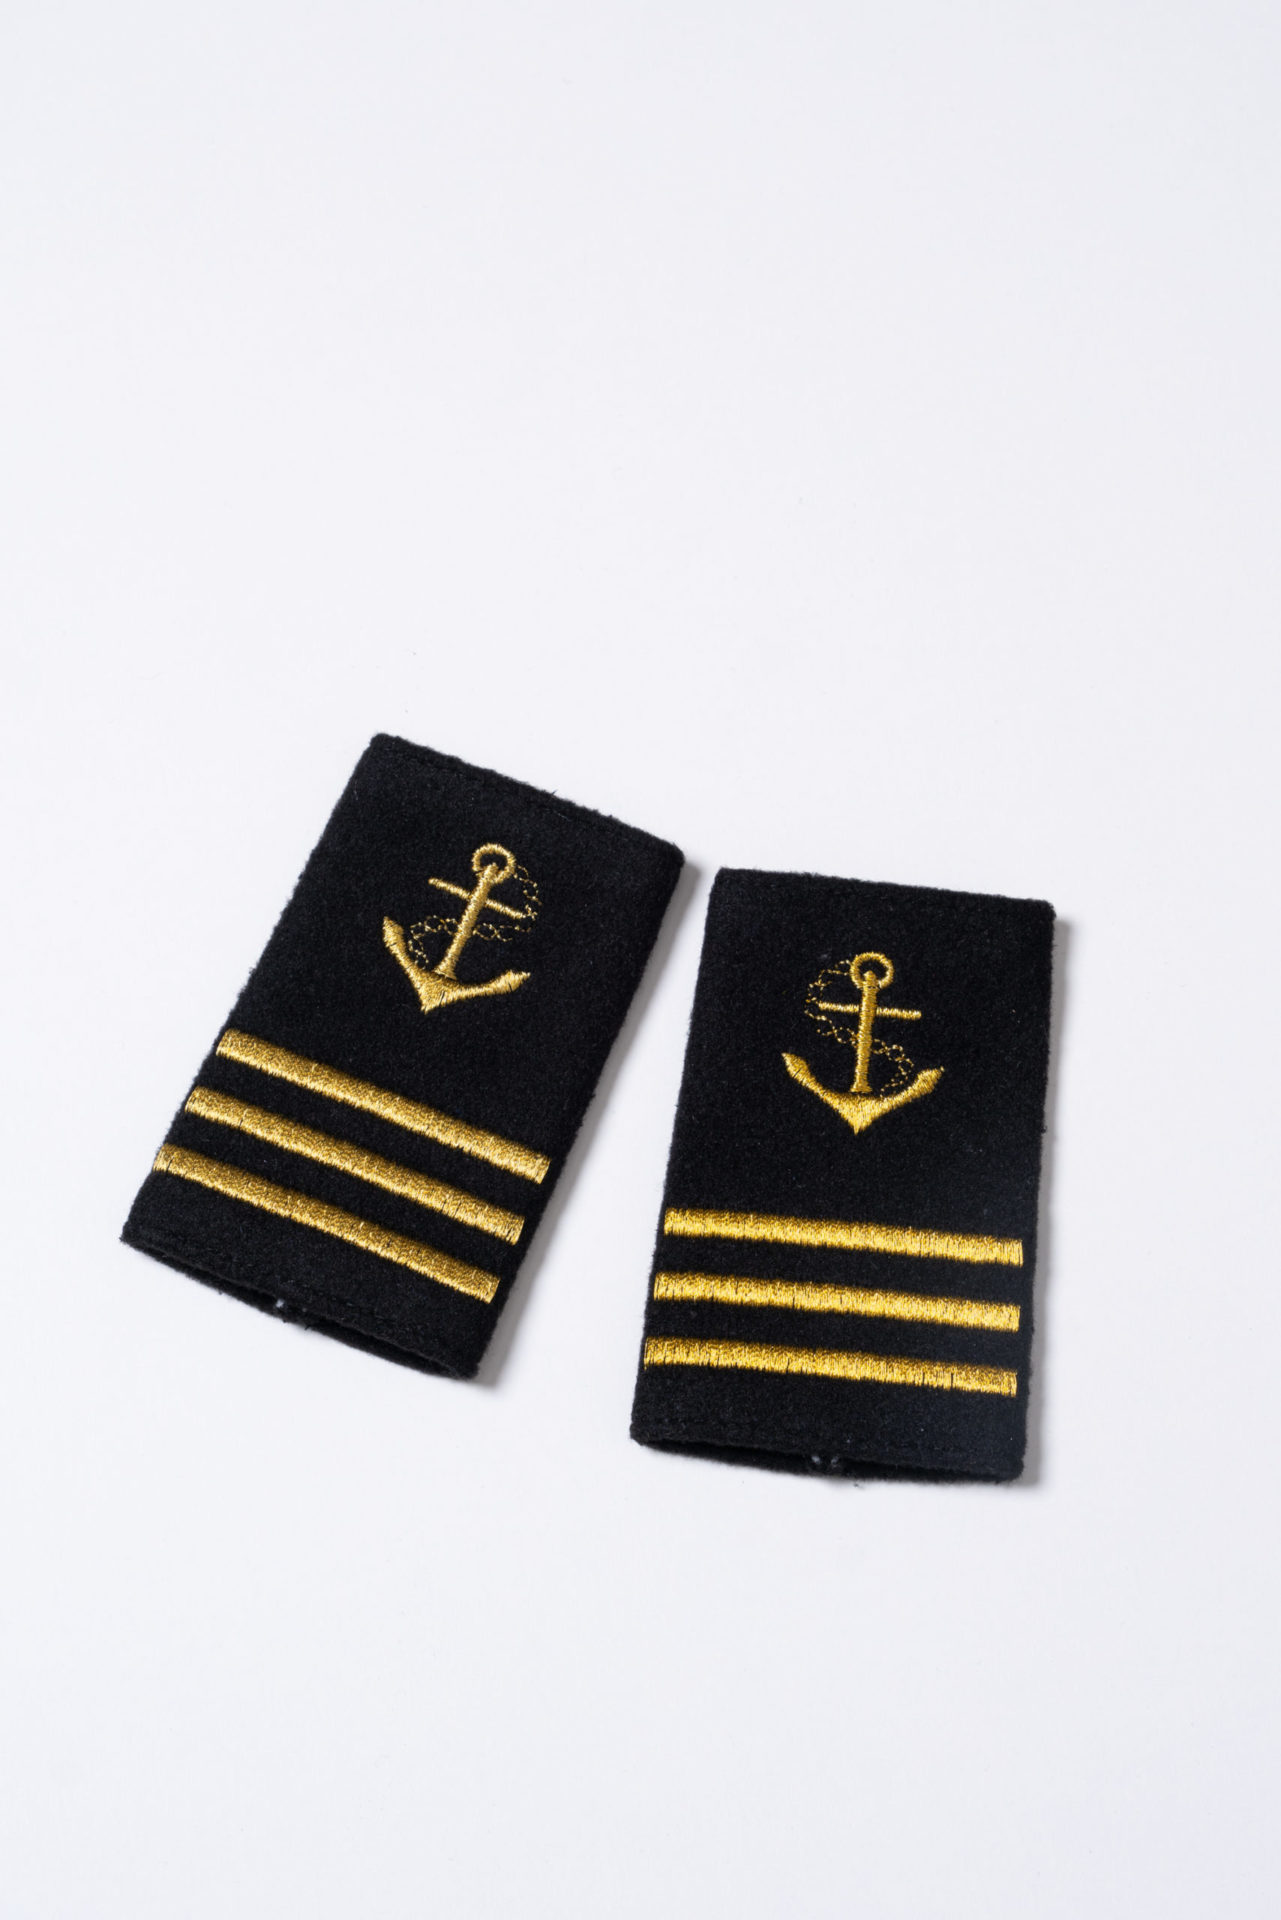 Gold first officer epaulettes